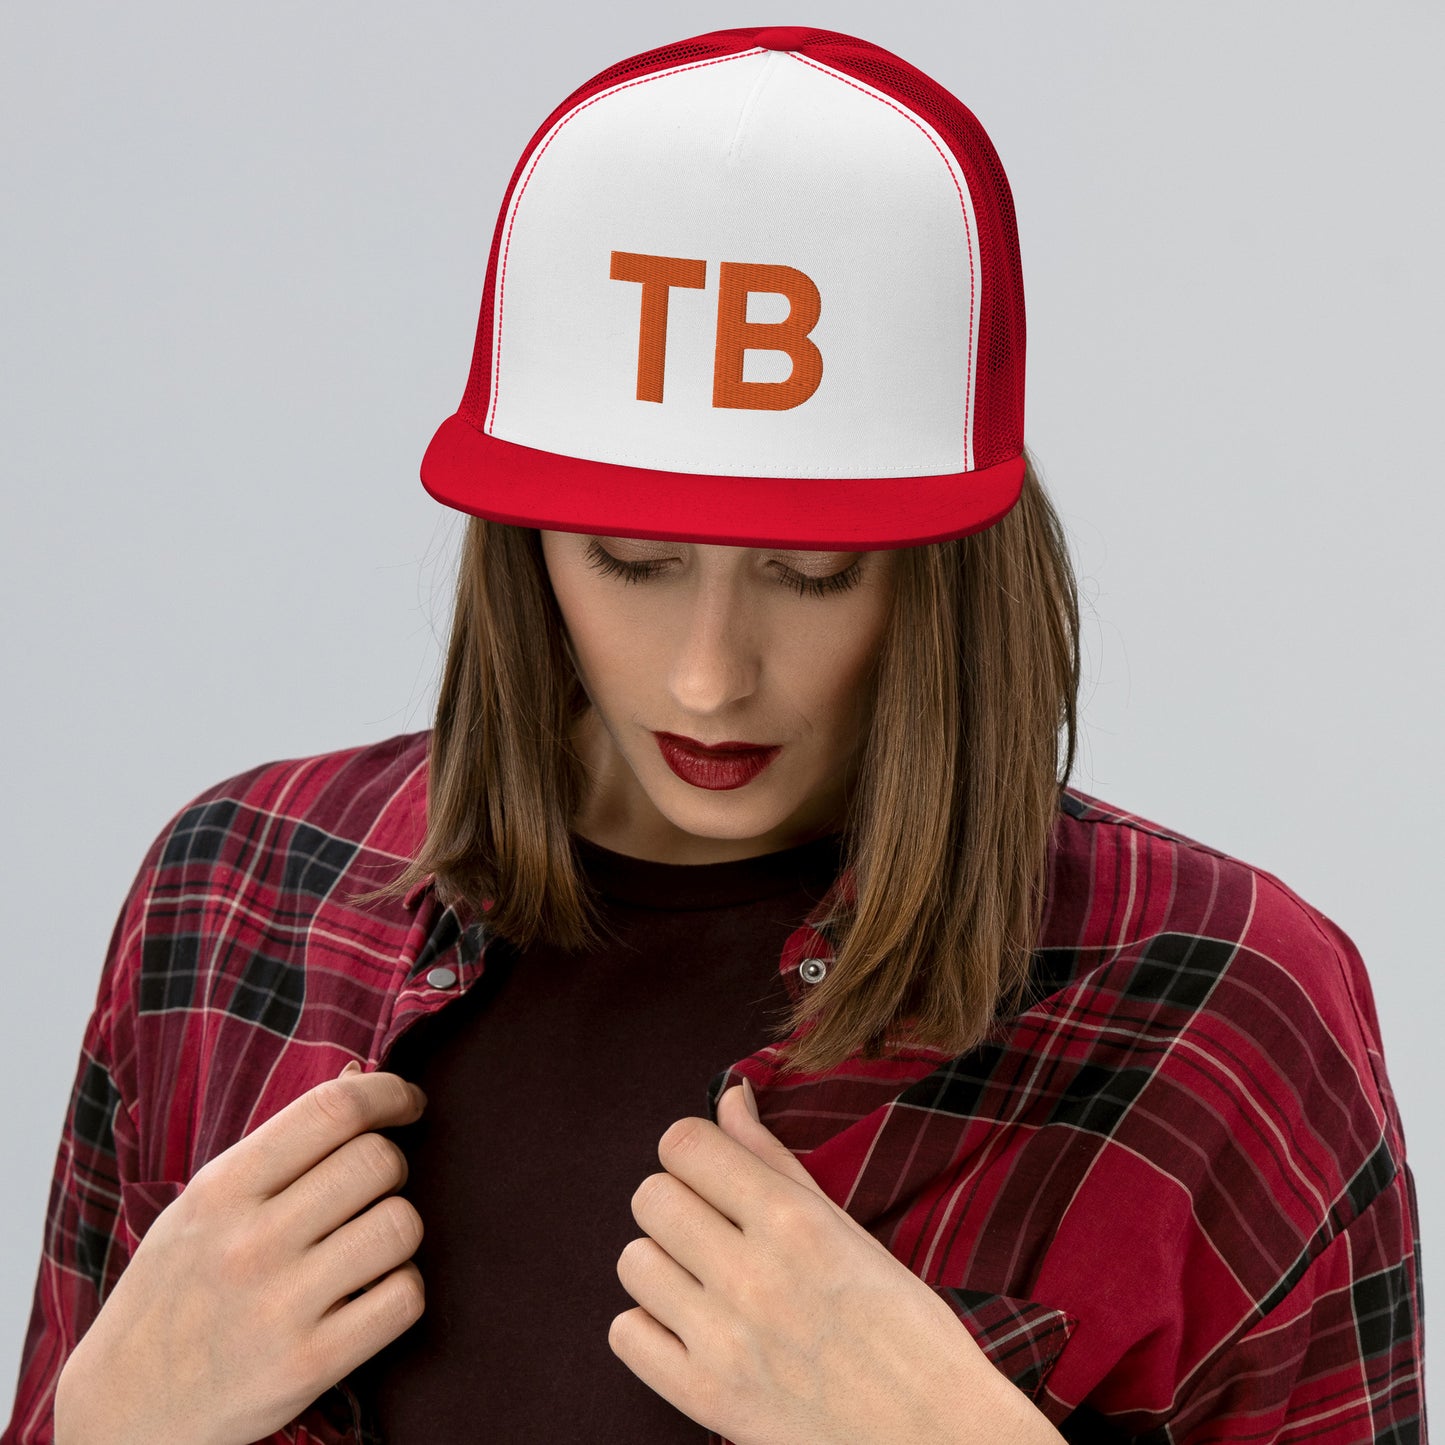 TB Tampa Bay Faithful Trucker Hat